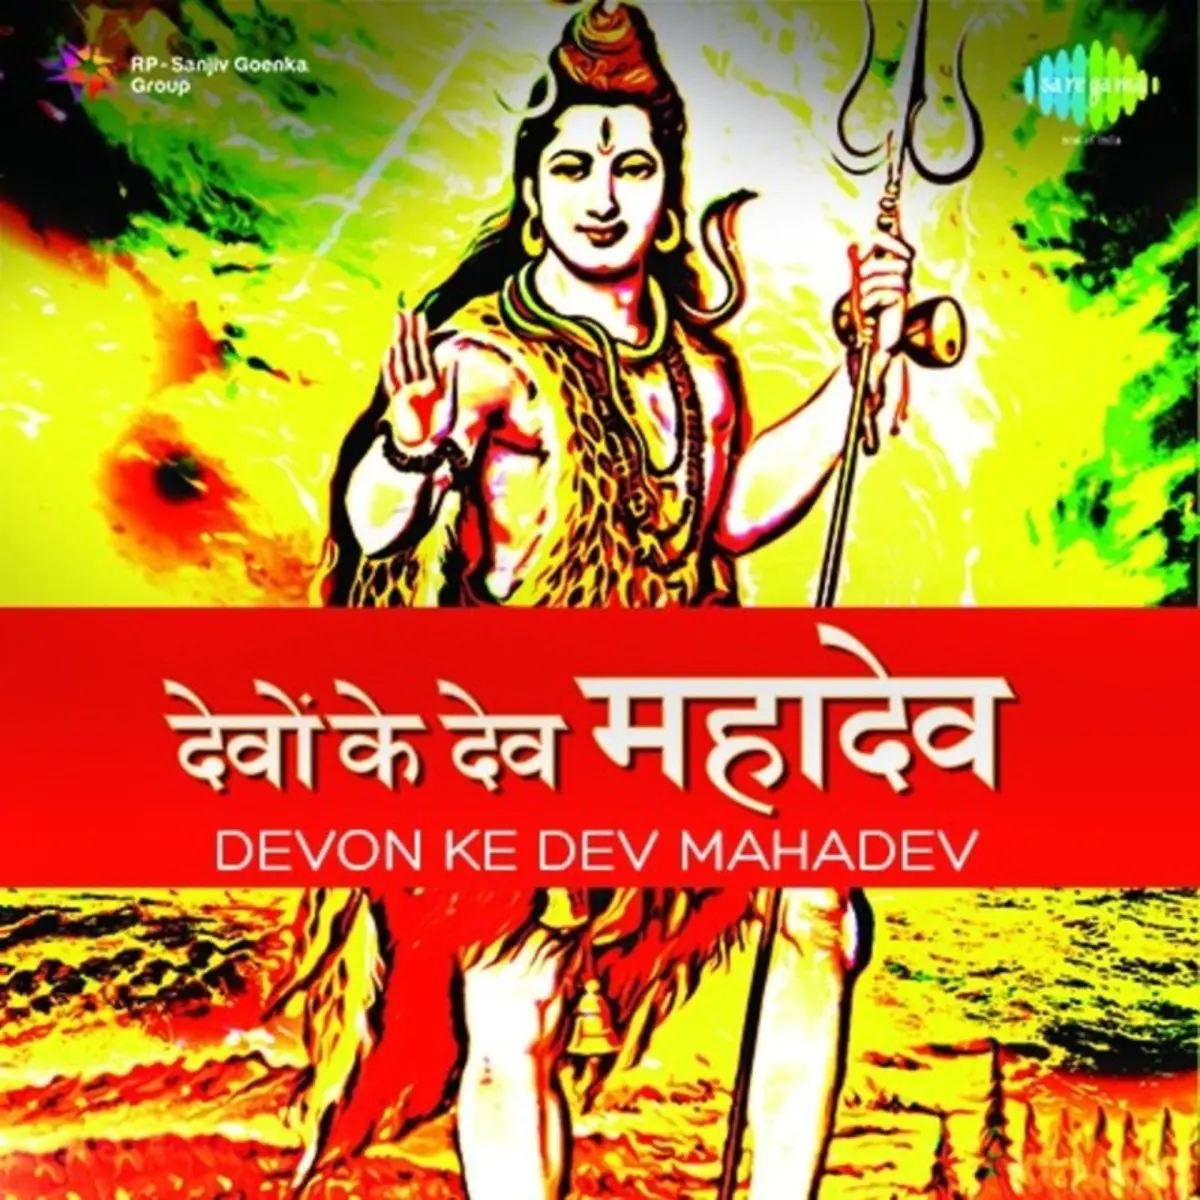 Devon Ka Dev Mahadev Songs Download Devon Ka Dev Mahadev Mp3 Songs Online Free On Gaana Com